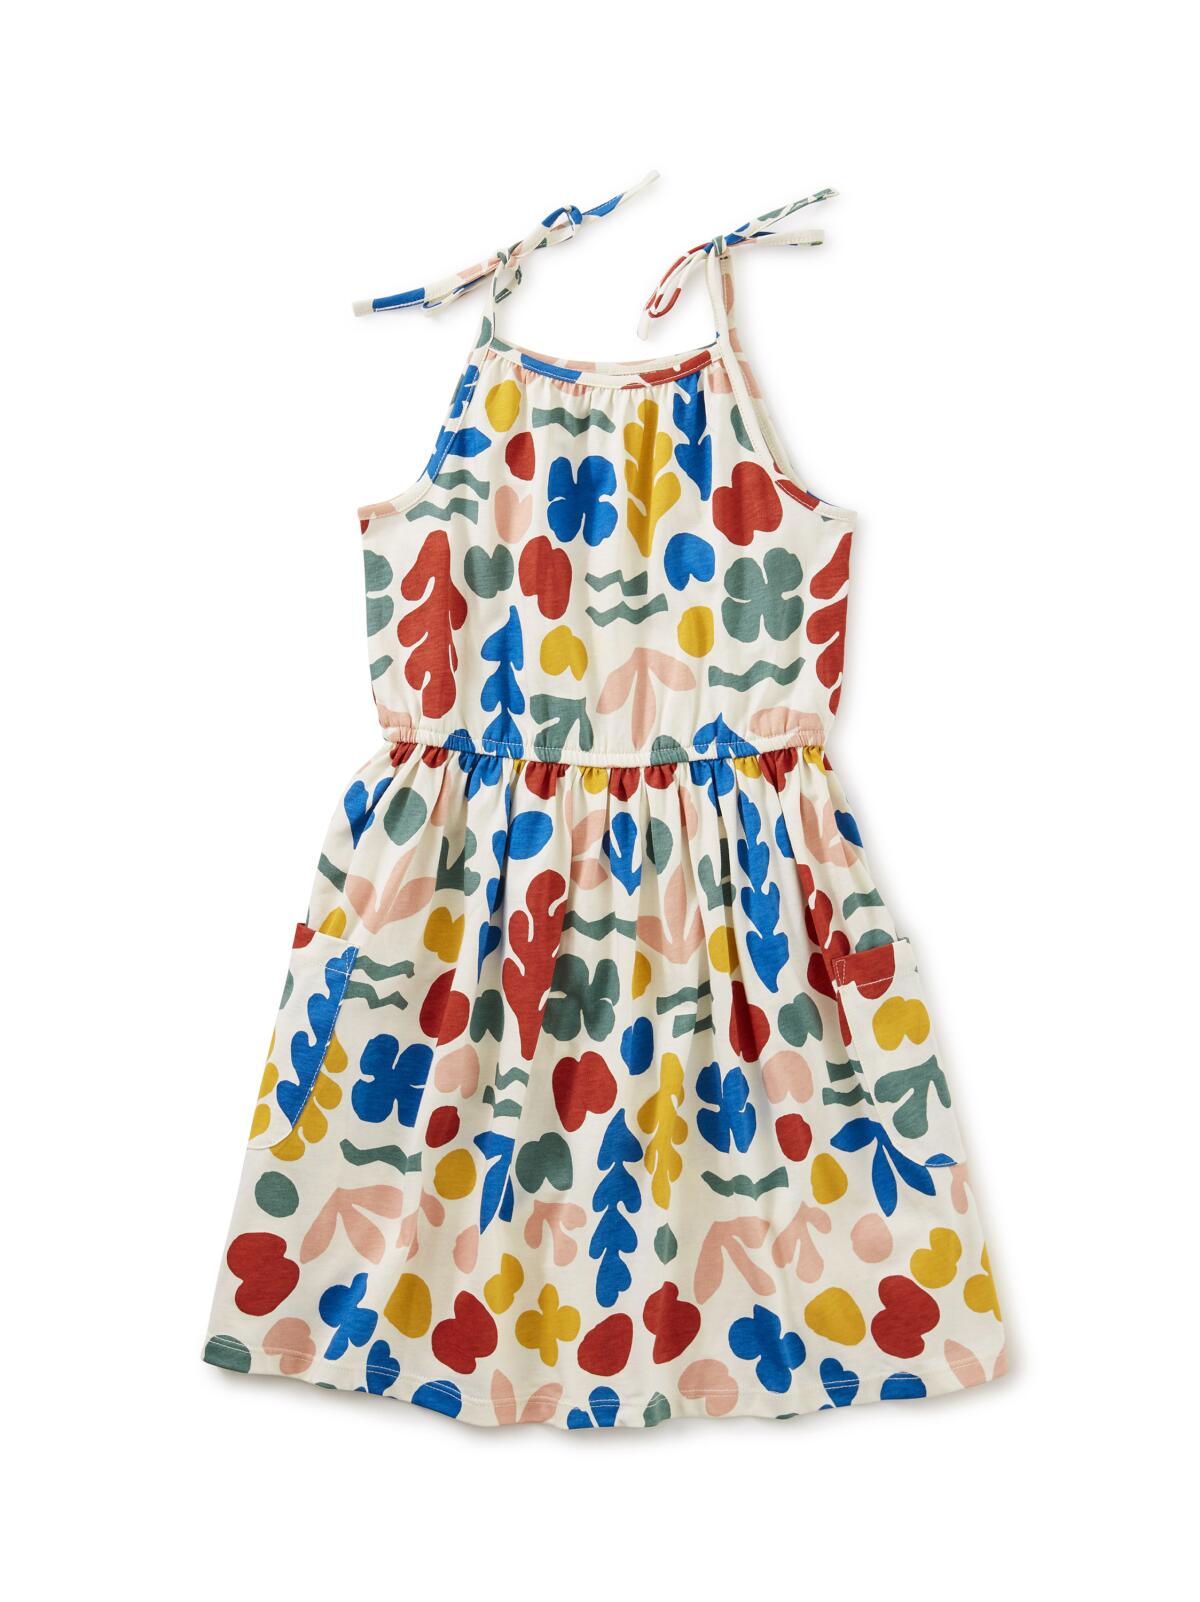 Tea Collection's colorful children's dress